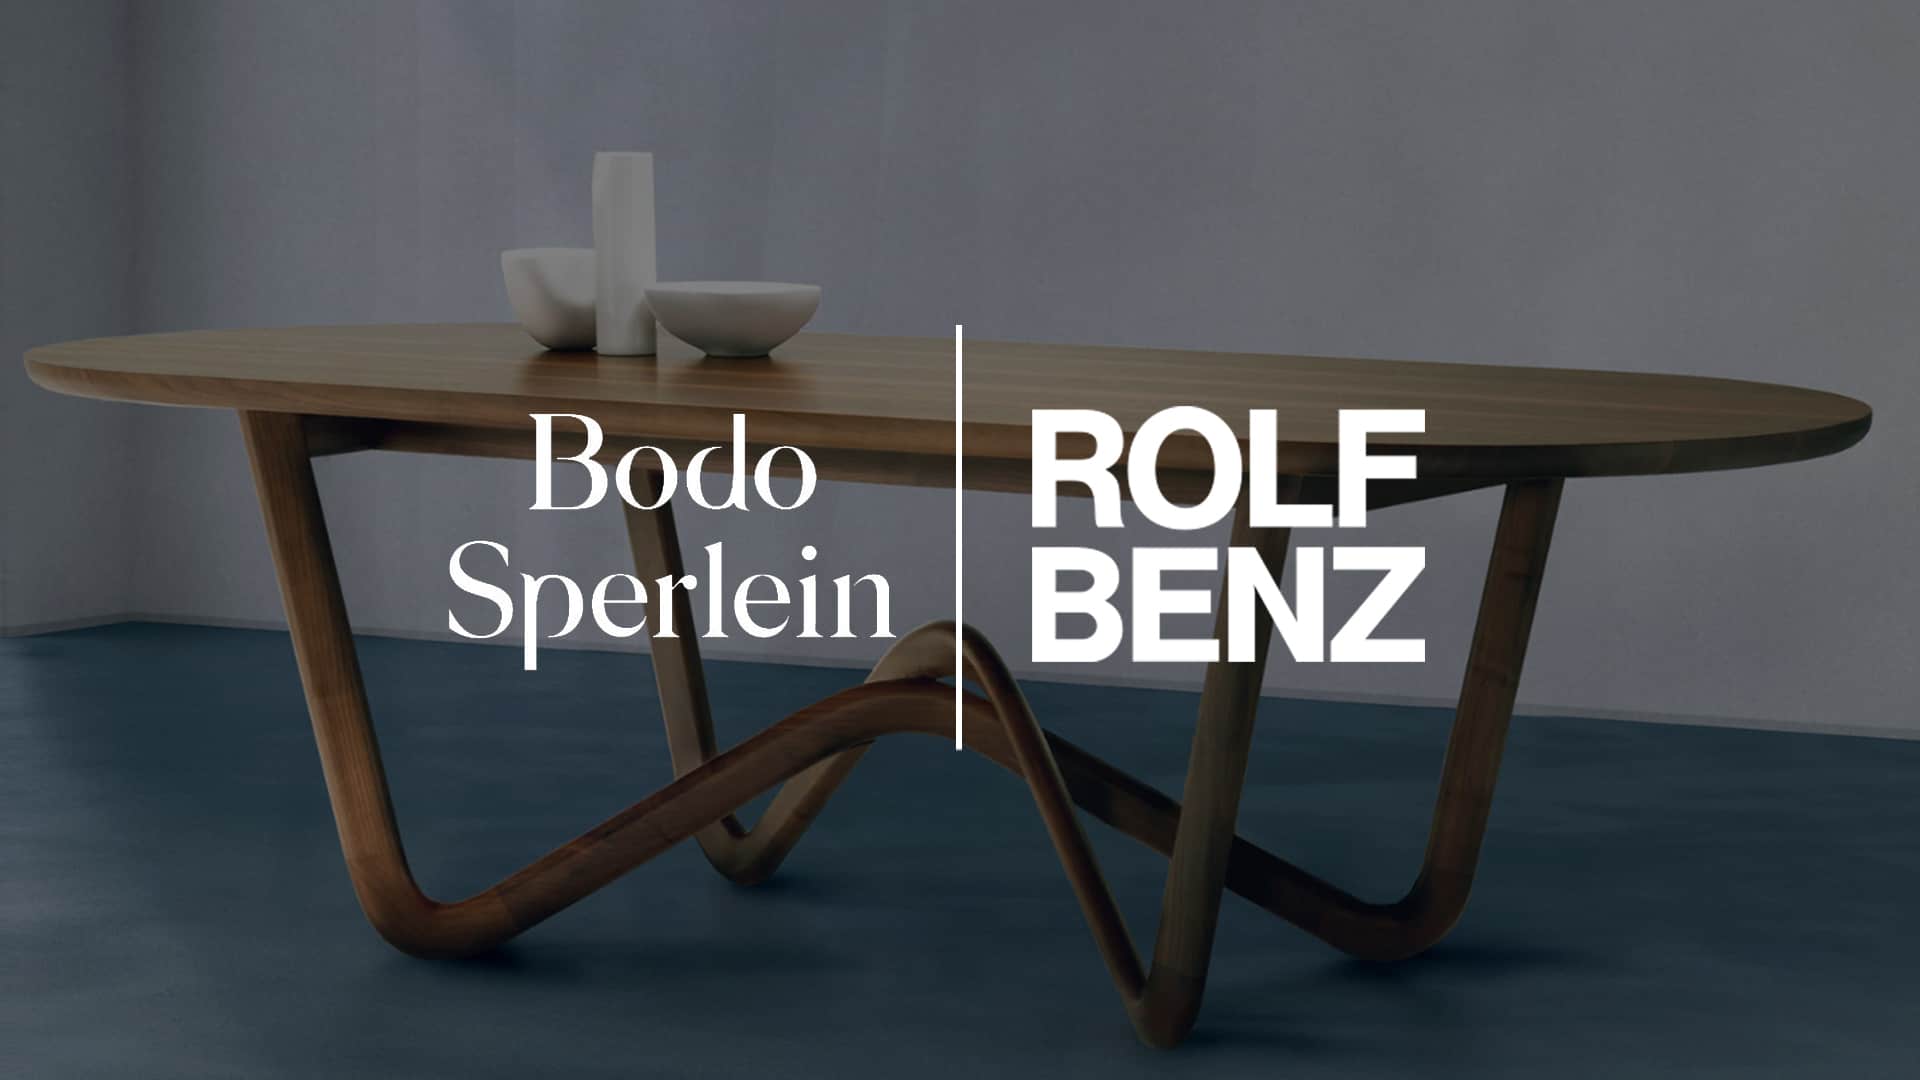 Bodo Sperlein x Rolf Benz | Seen Sign | München